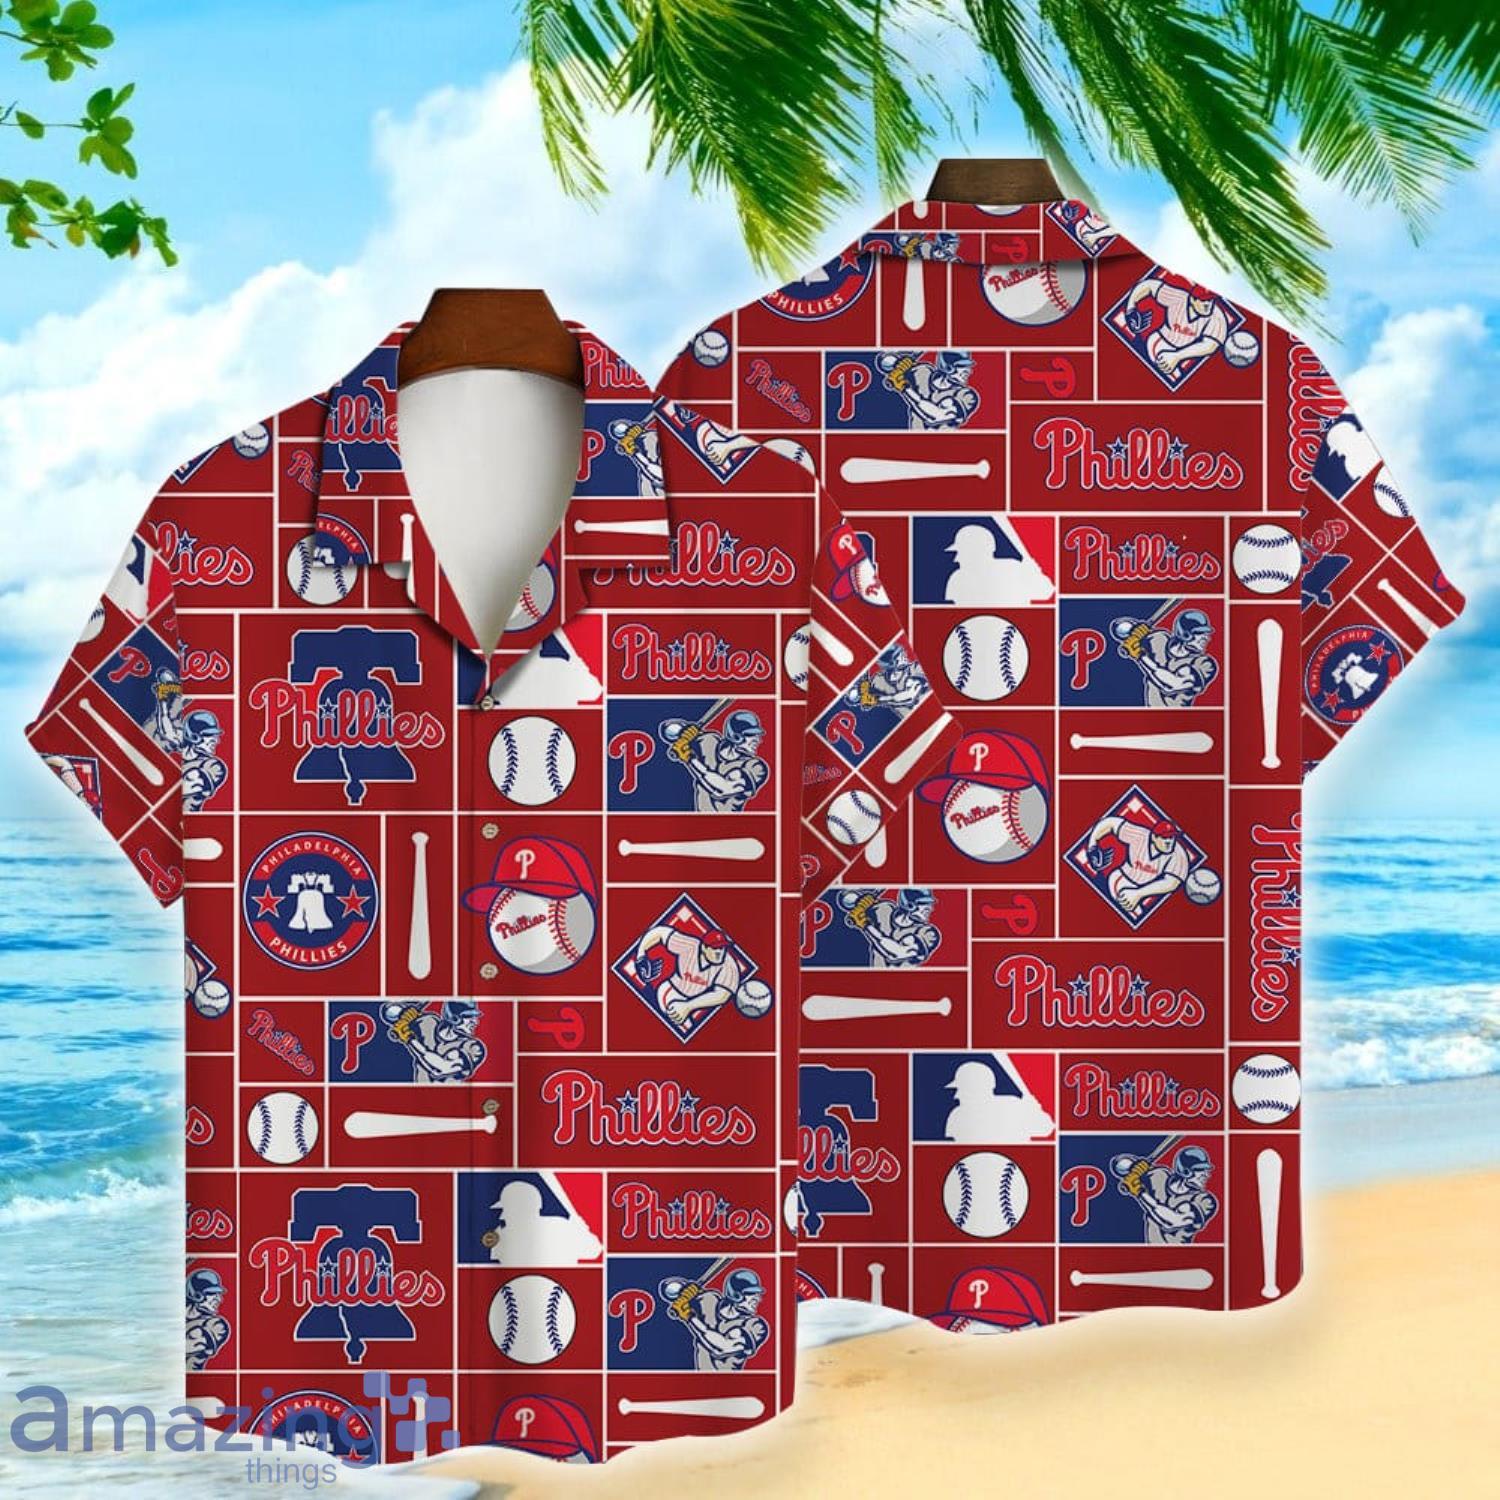 St. Louis Cardinals Major League Baseball Logo 3D Print Hawaiian